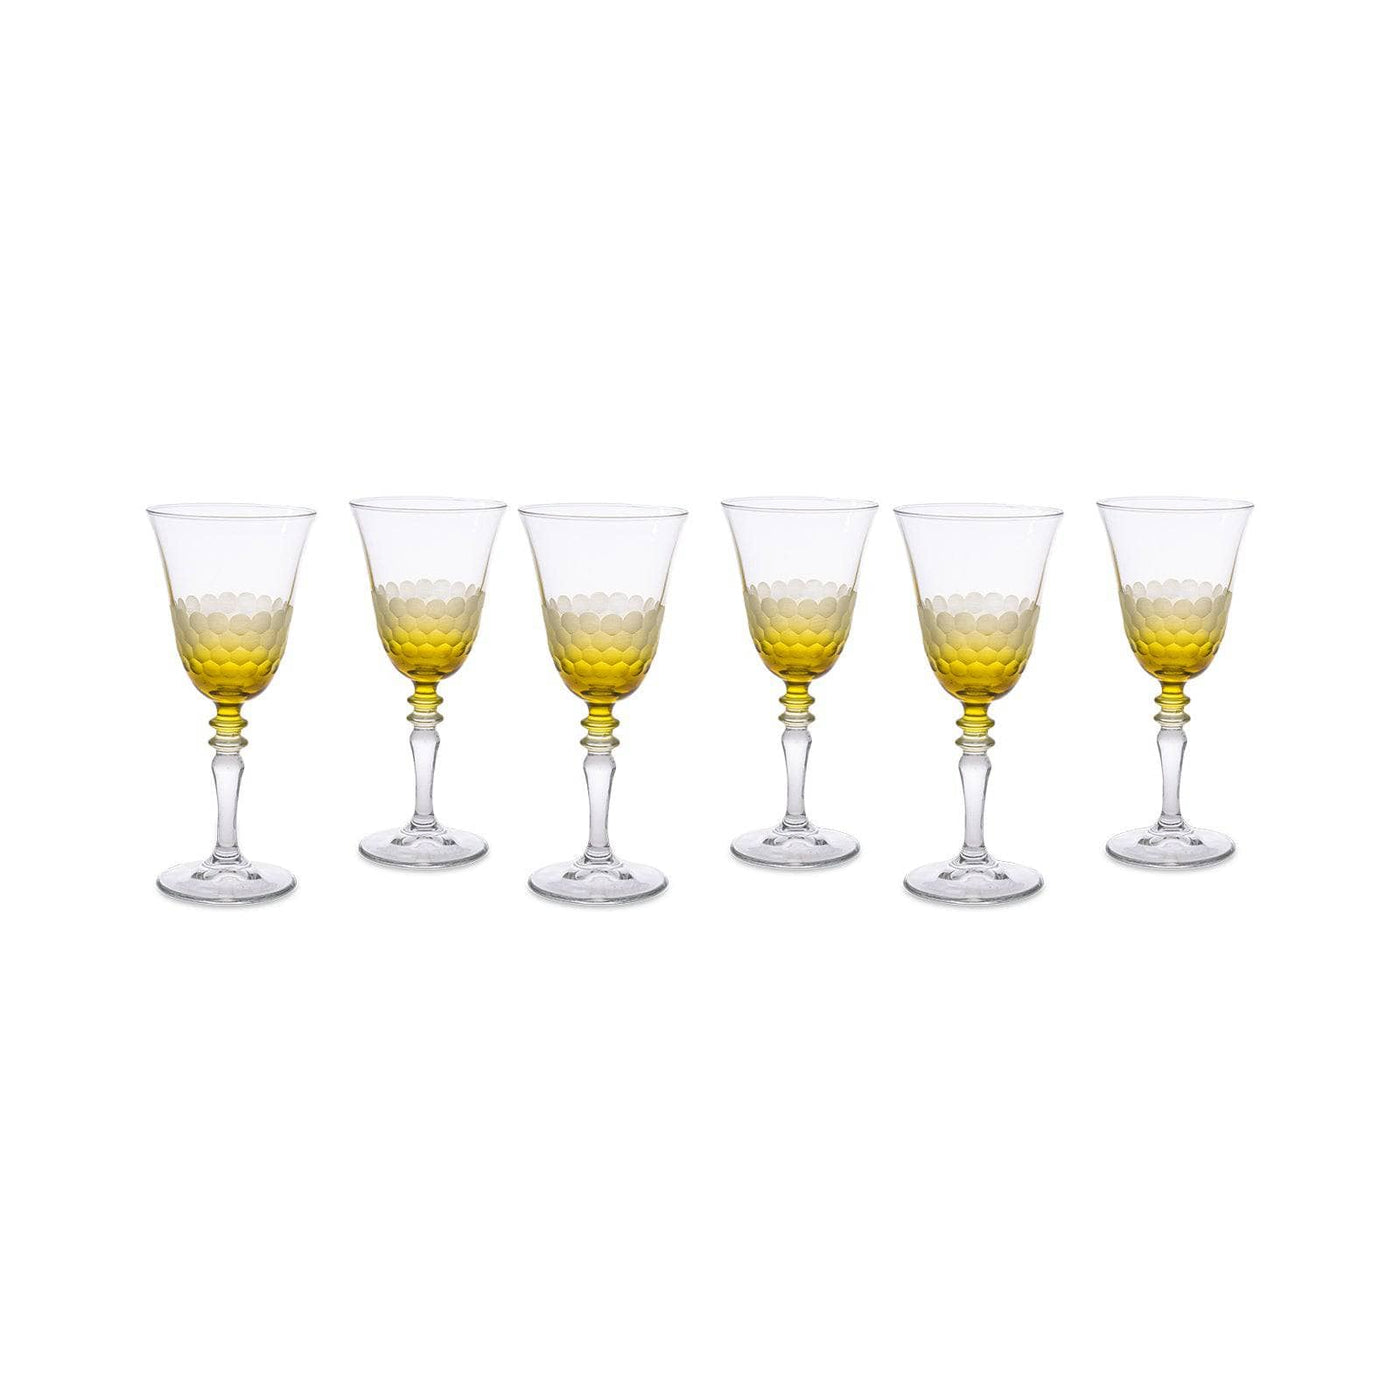 Bermondsey Set of 6 Wine Glasses, Mustard, 270 ml Glasses & Tumblers sazy.com